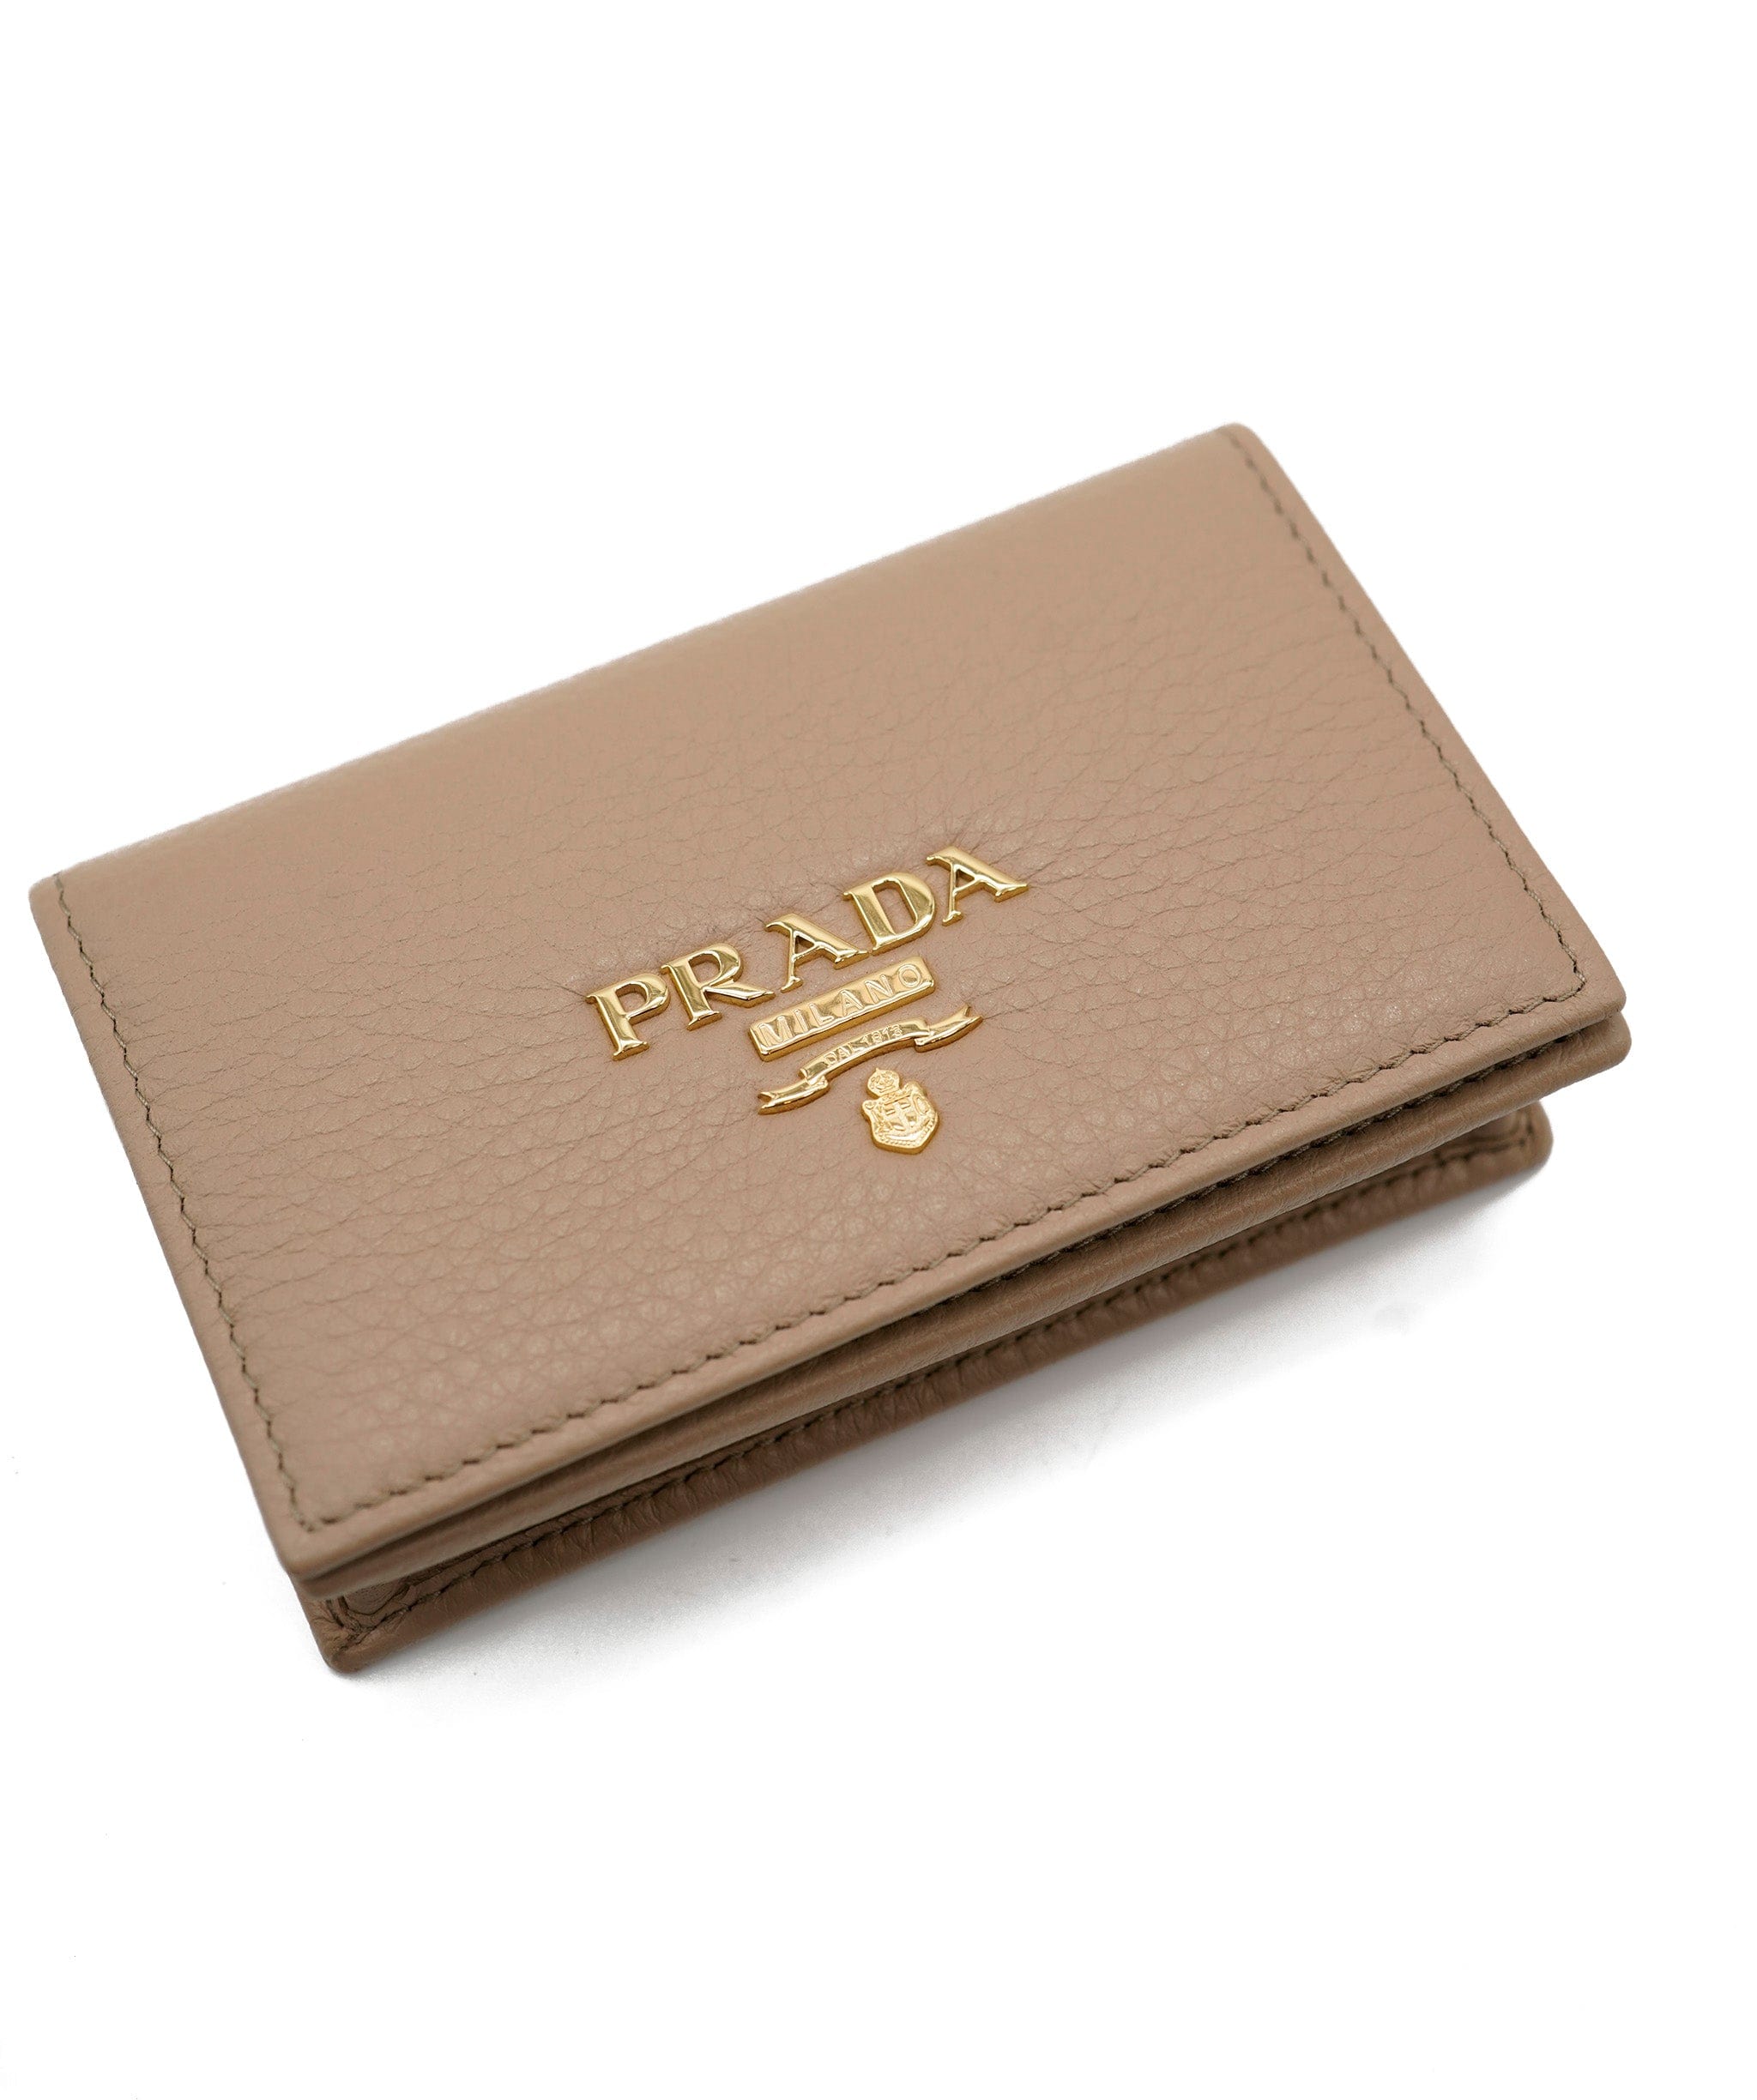 Prada Prada beige card holder  ASL6002